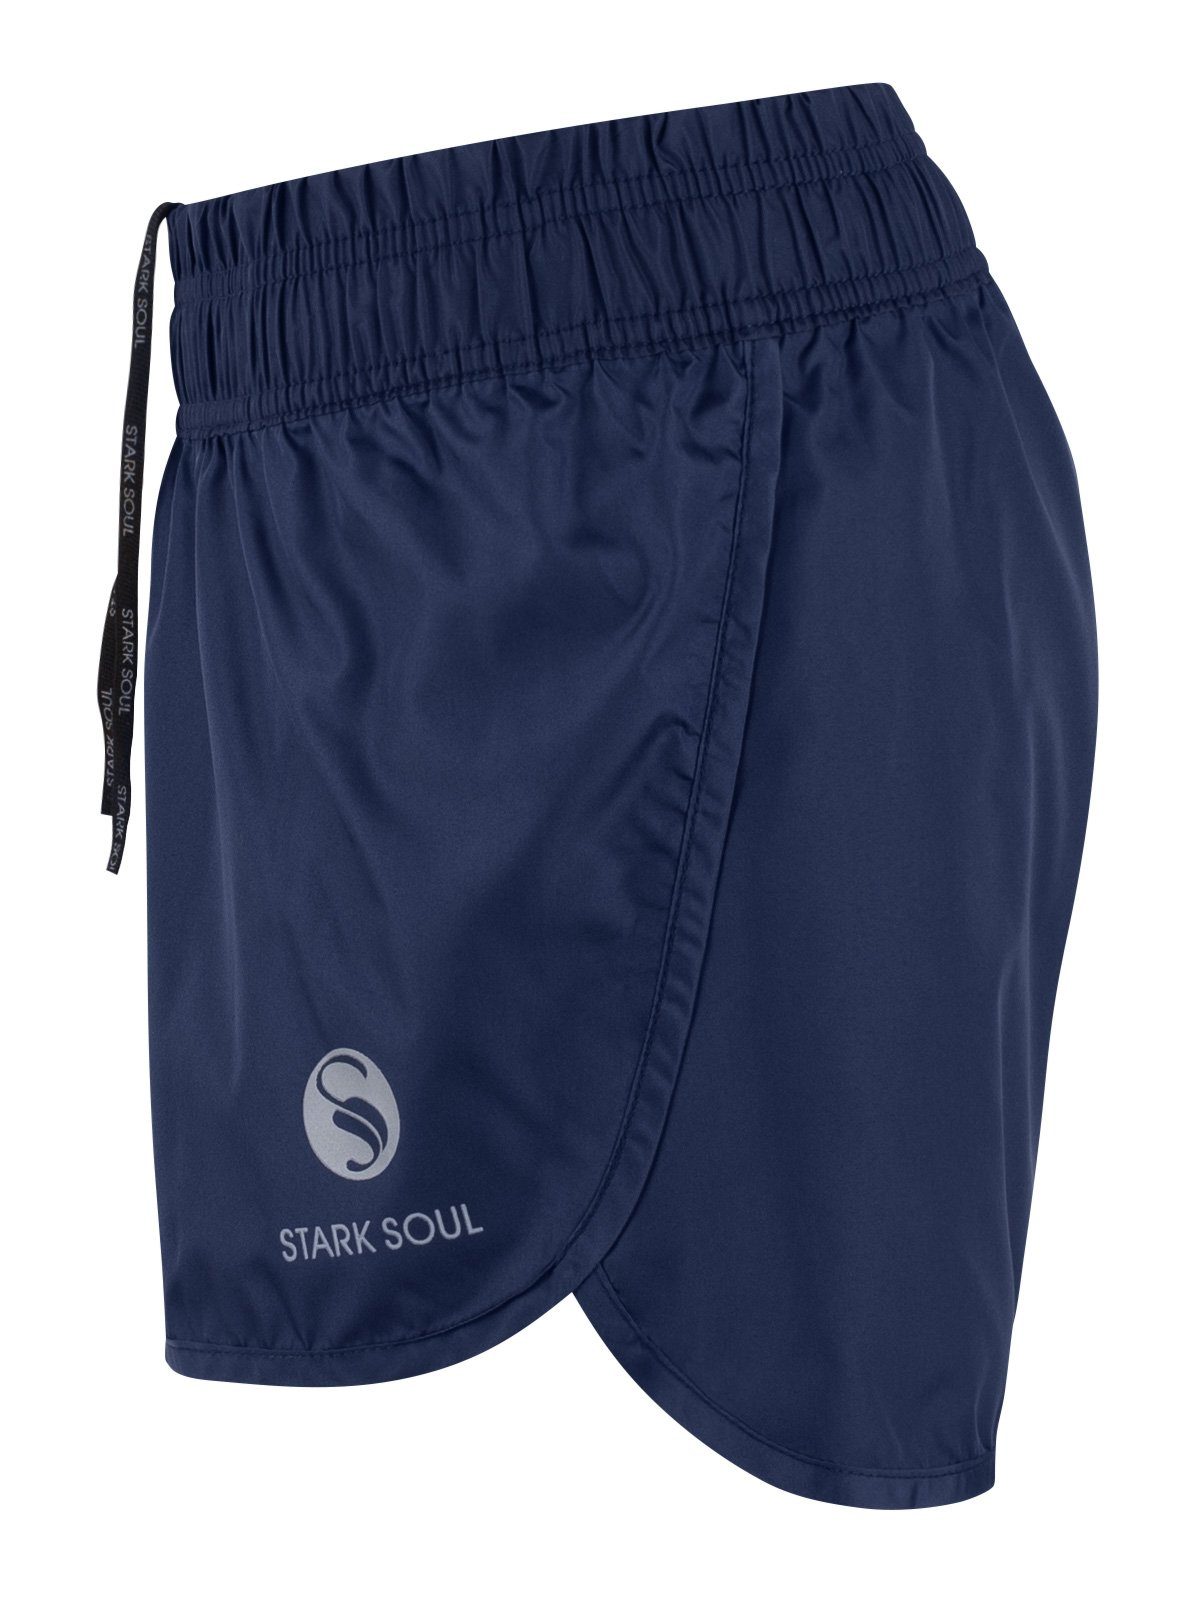 Schnelltrocknend kurze Short Dry Quick - Marineblau Material Soul® Sport Sporthose Sporthose aus Stark -